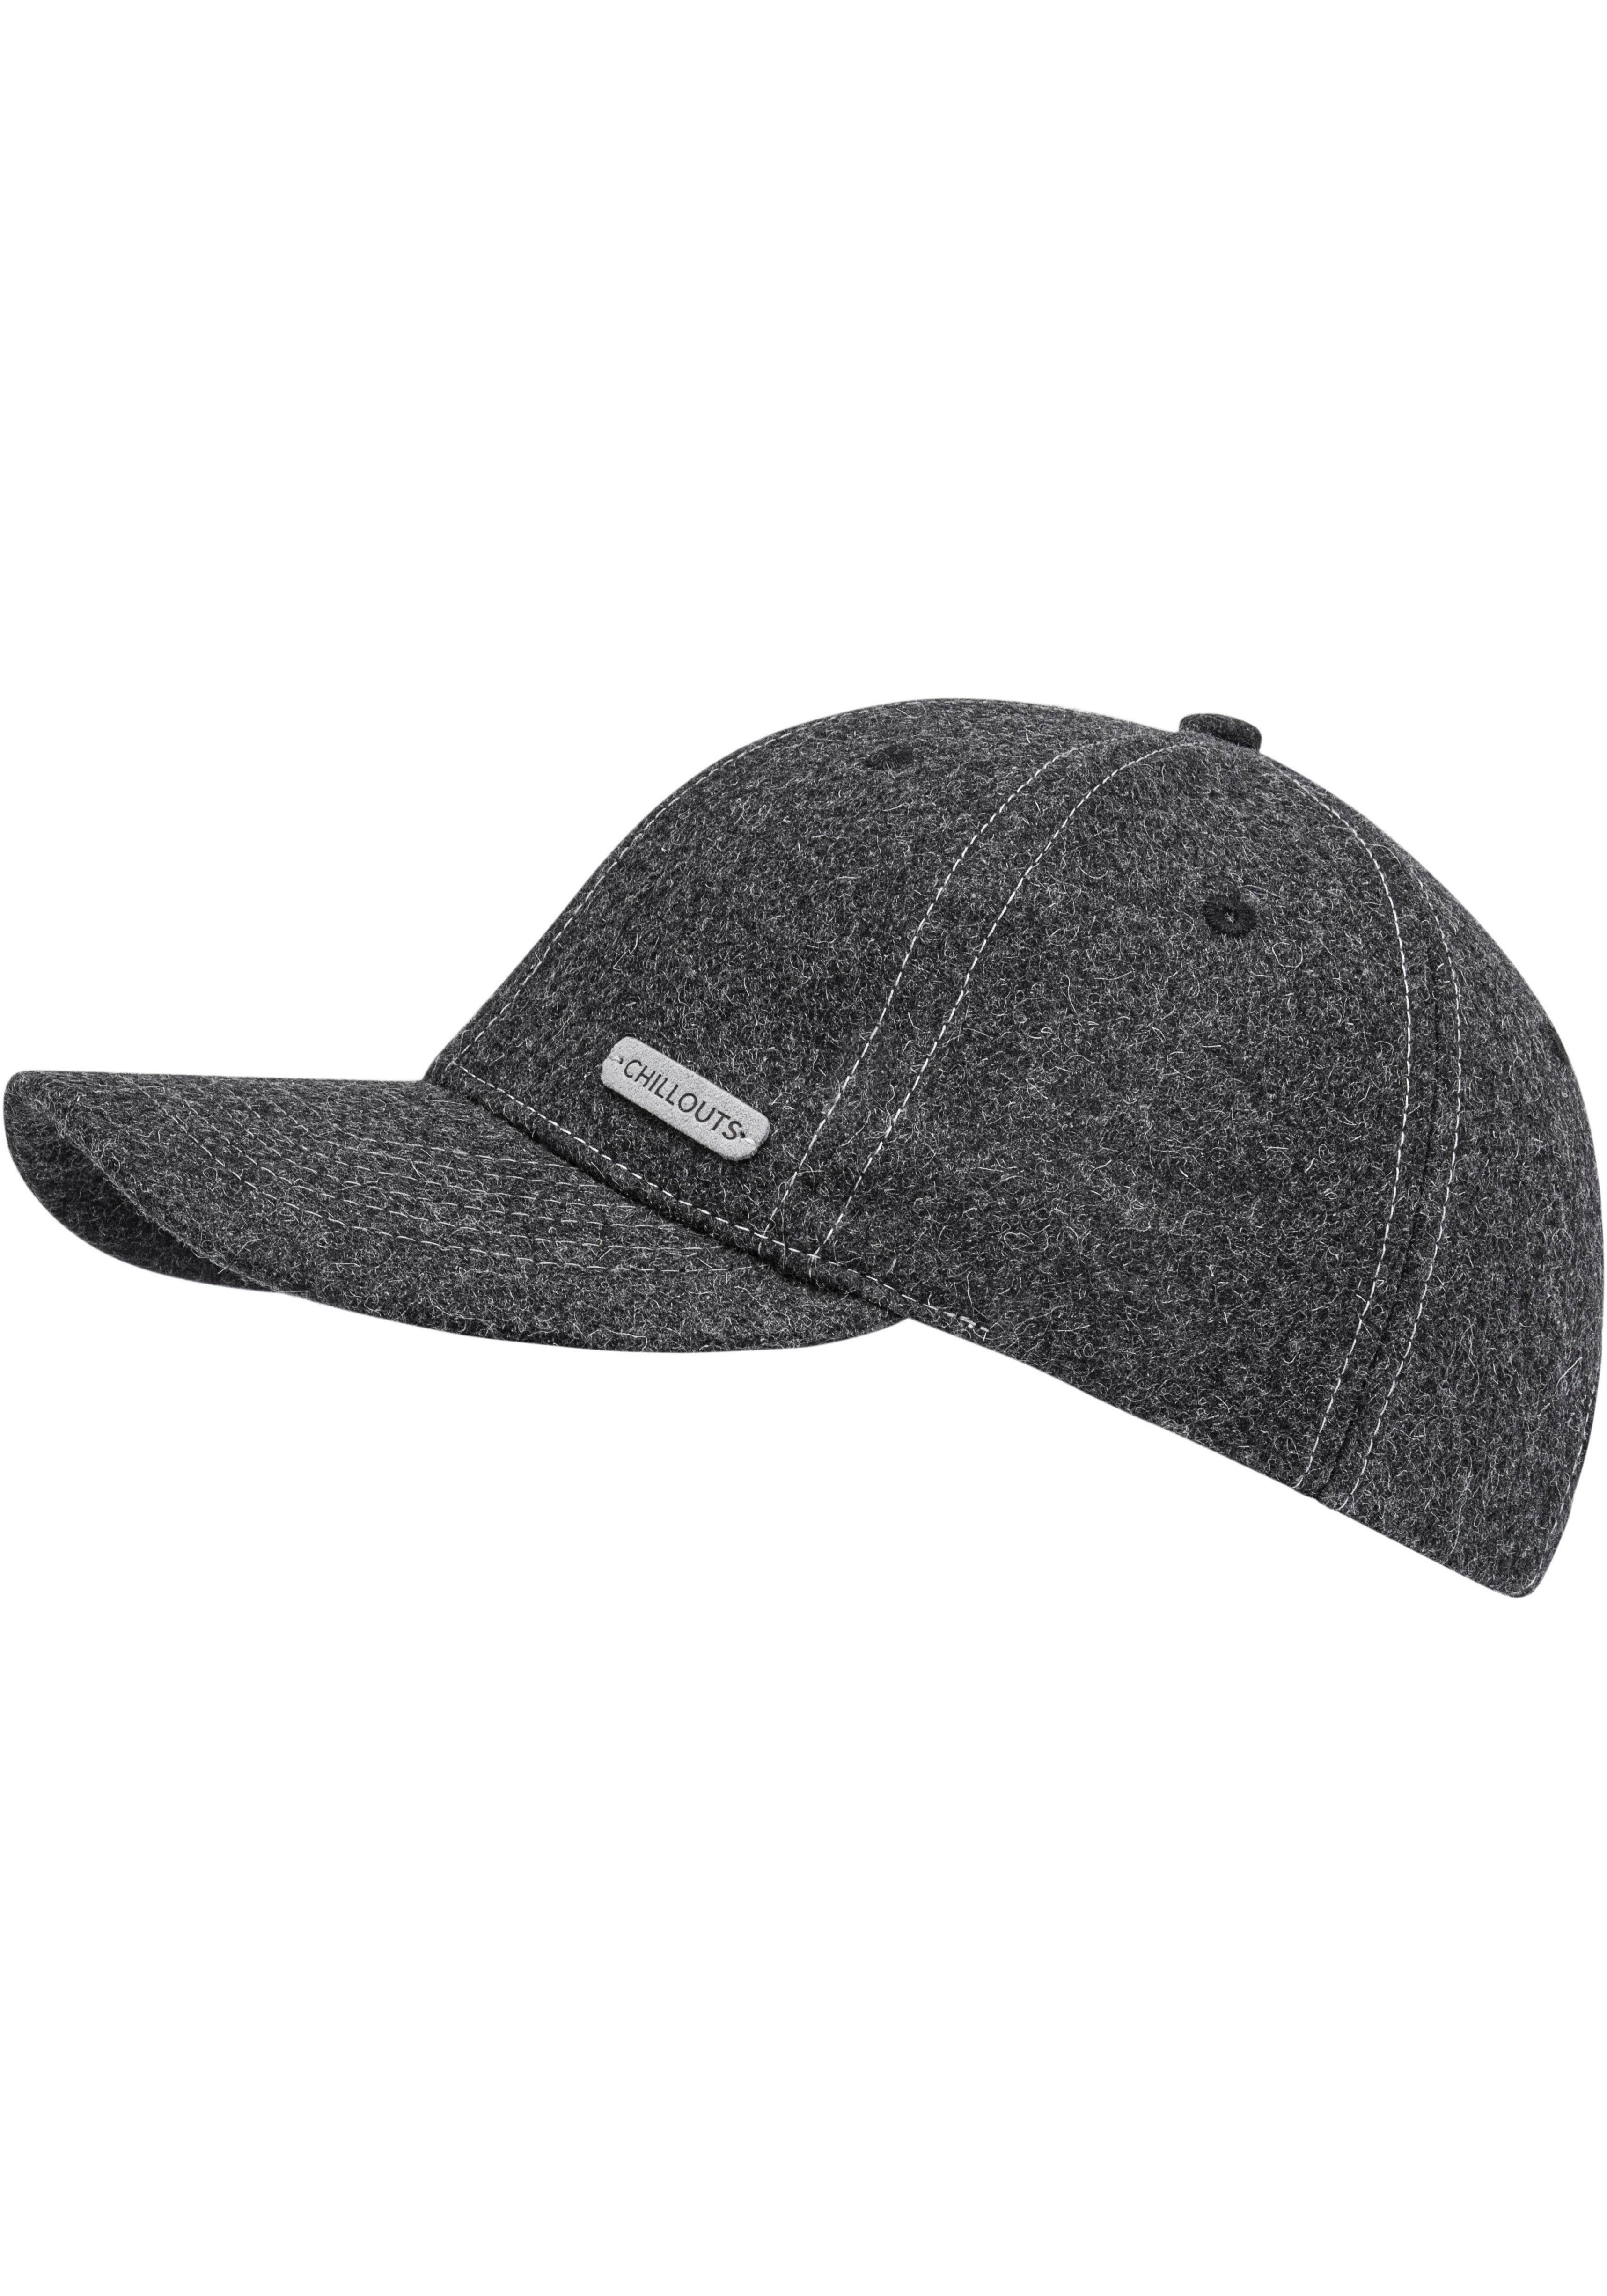 chillouts Baseball Cap Material grey dark Mateo Wasserabweisendes Hat